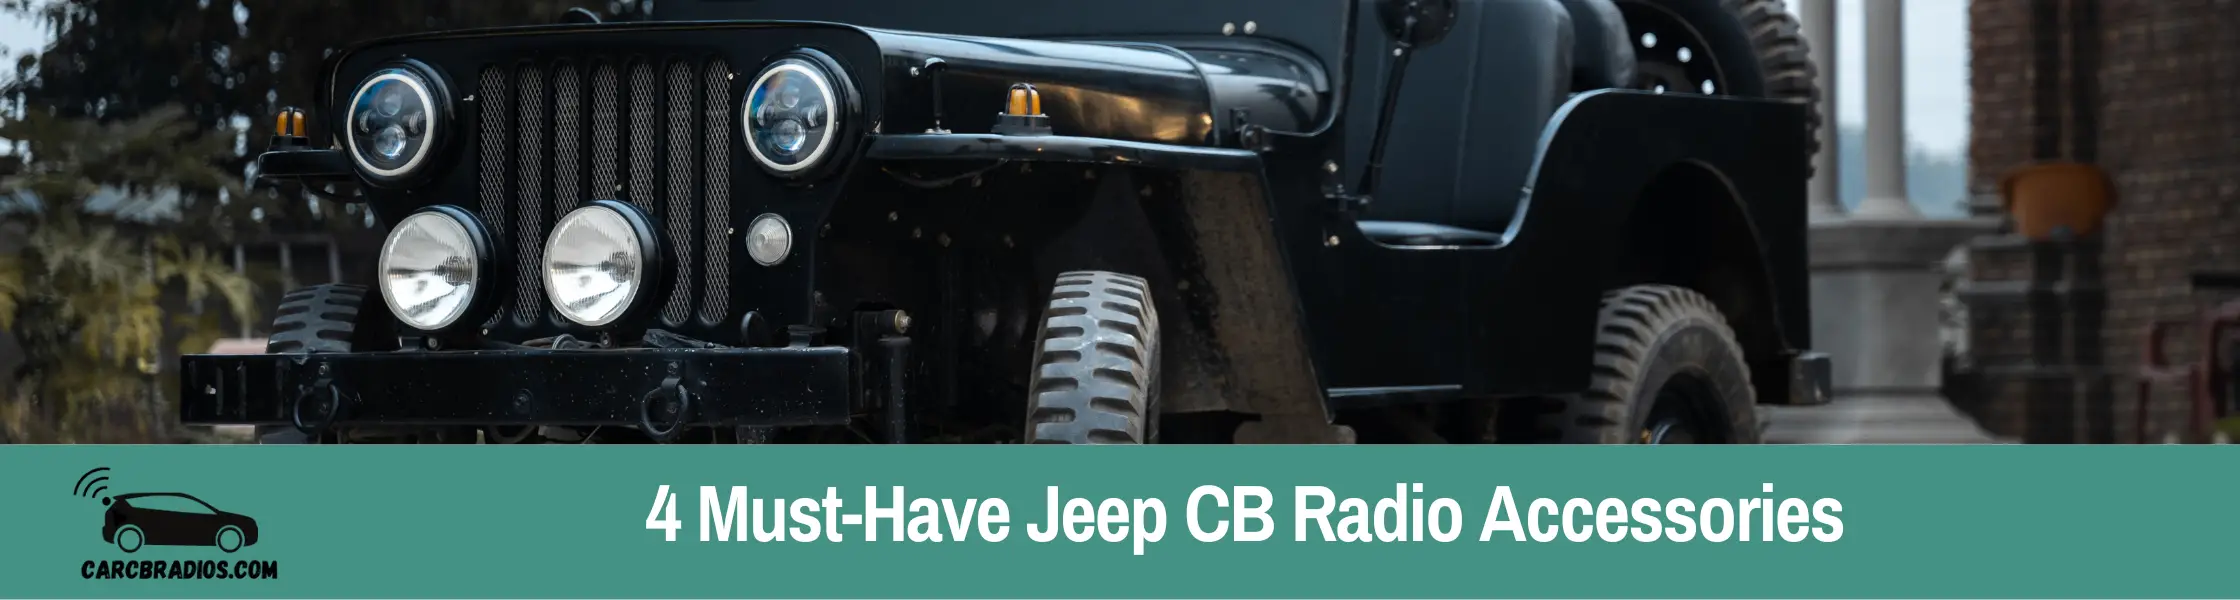 4 Must-Have Jeep CB Radio Accessories